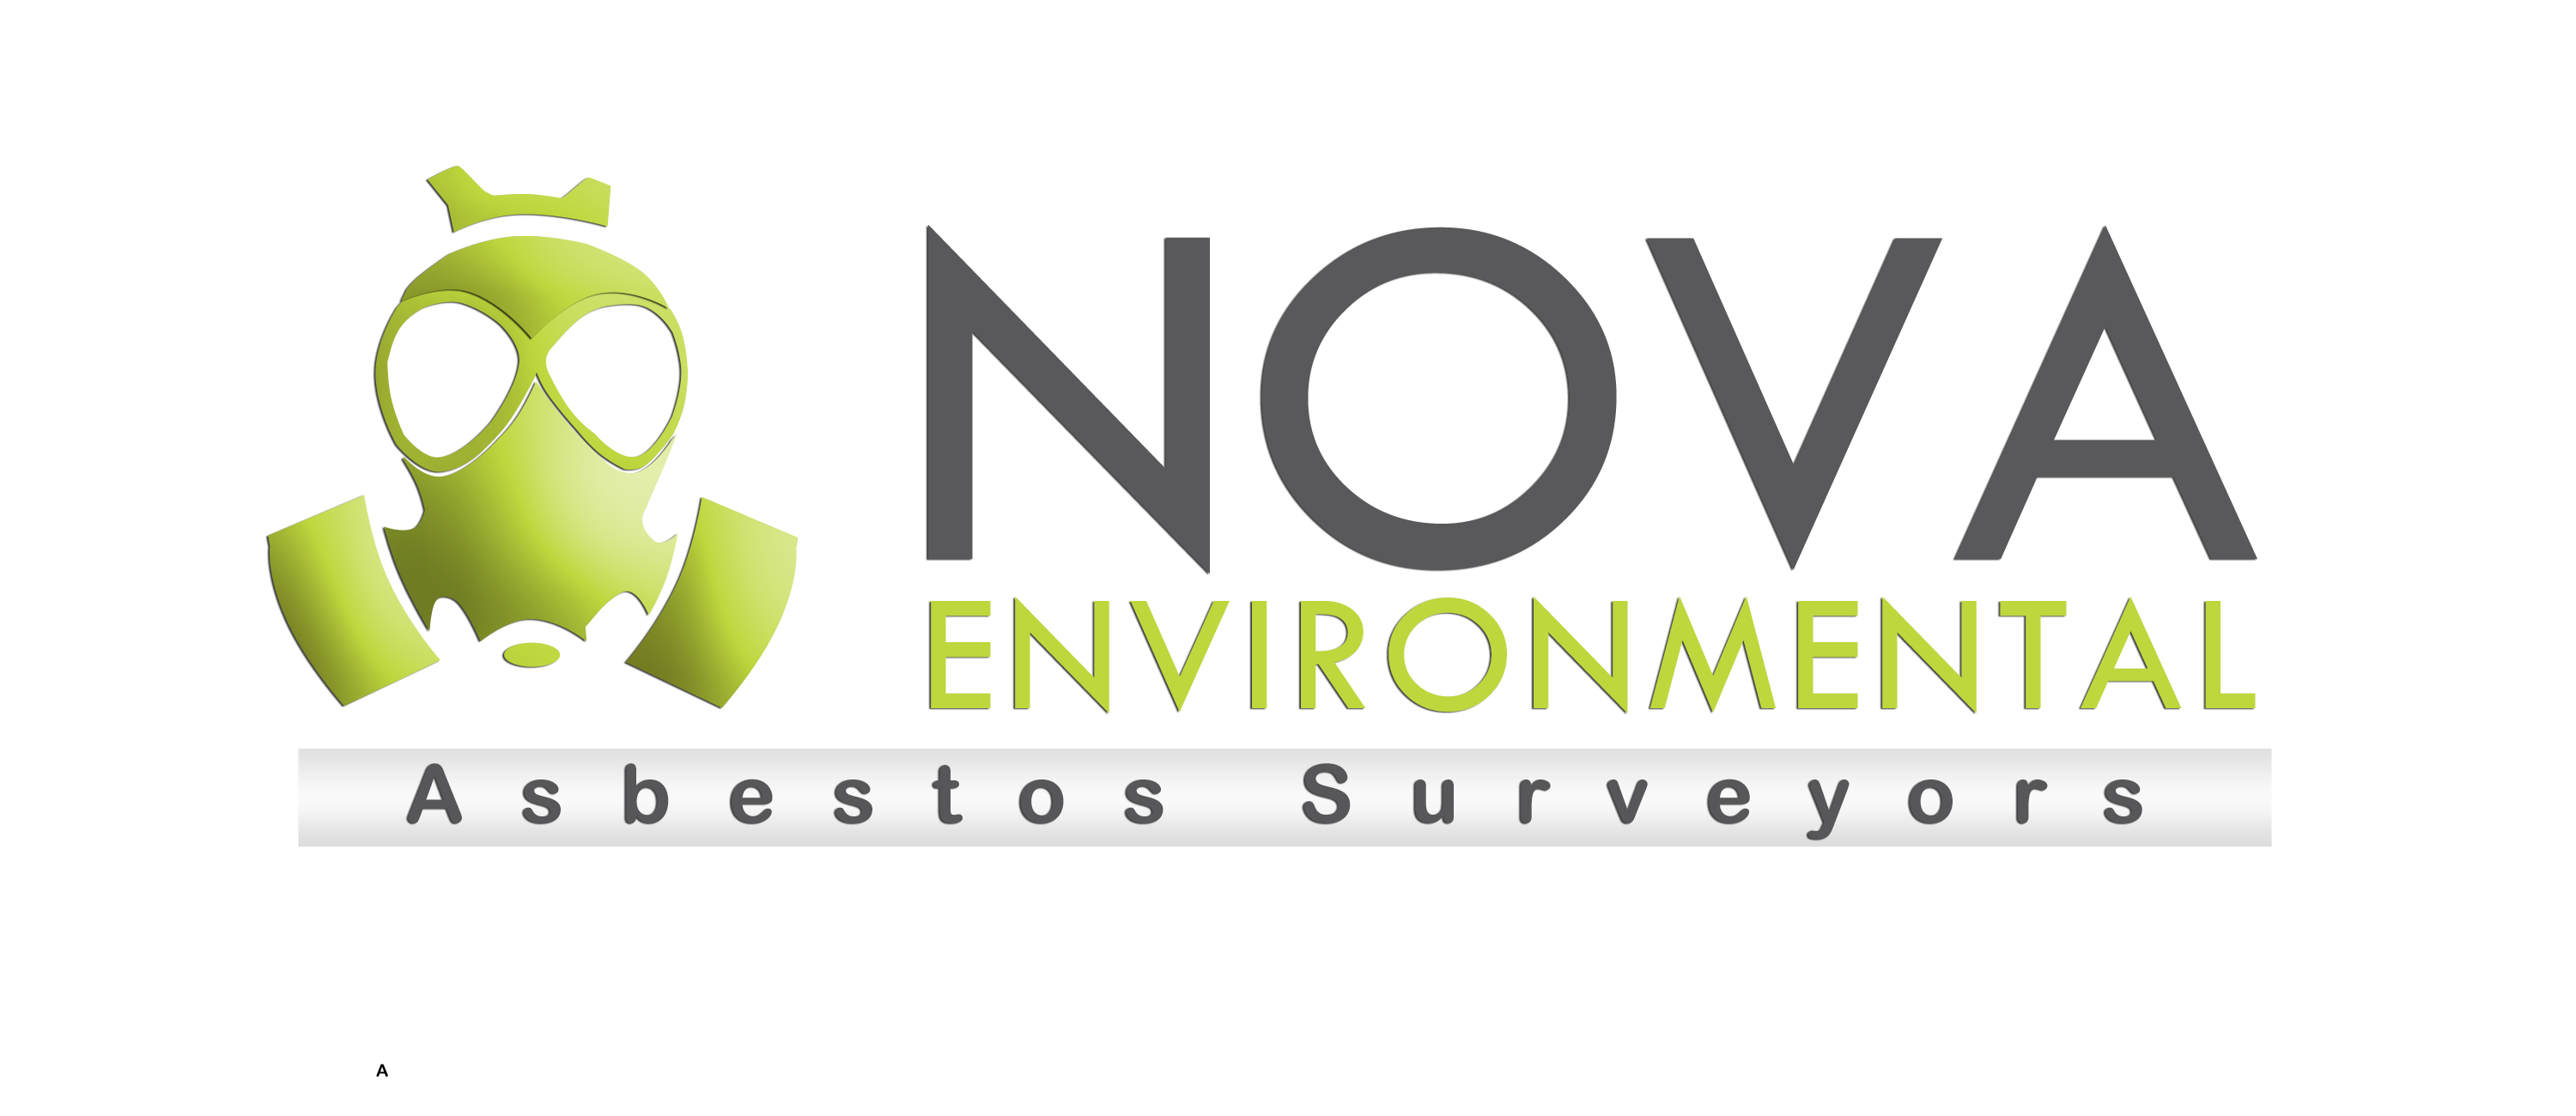 Nova Environmental Asbestos Surveys